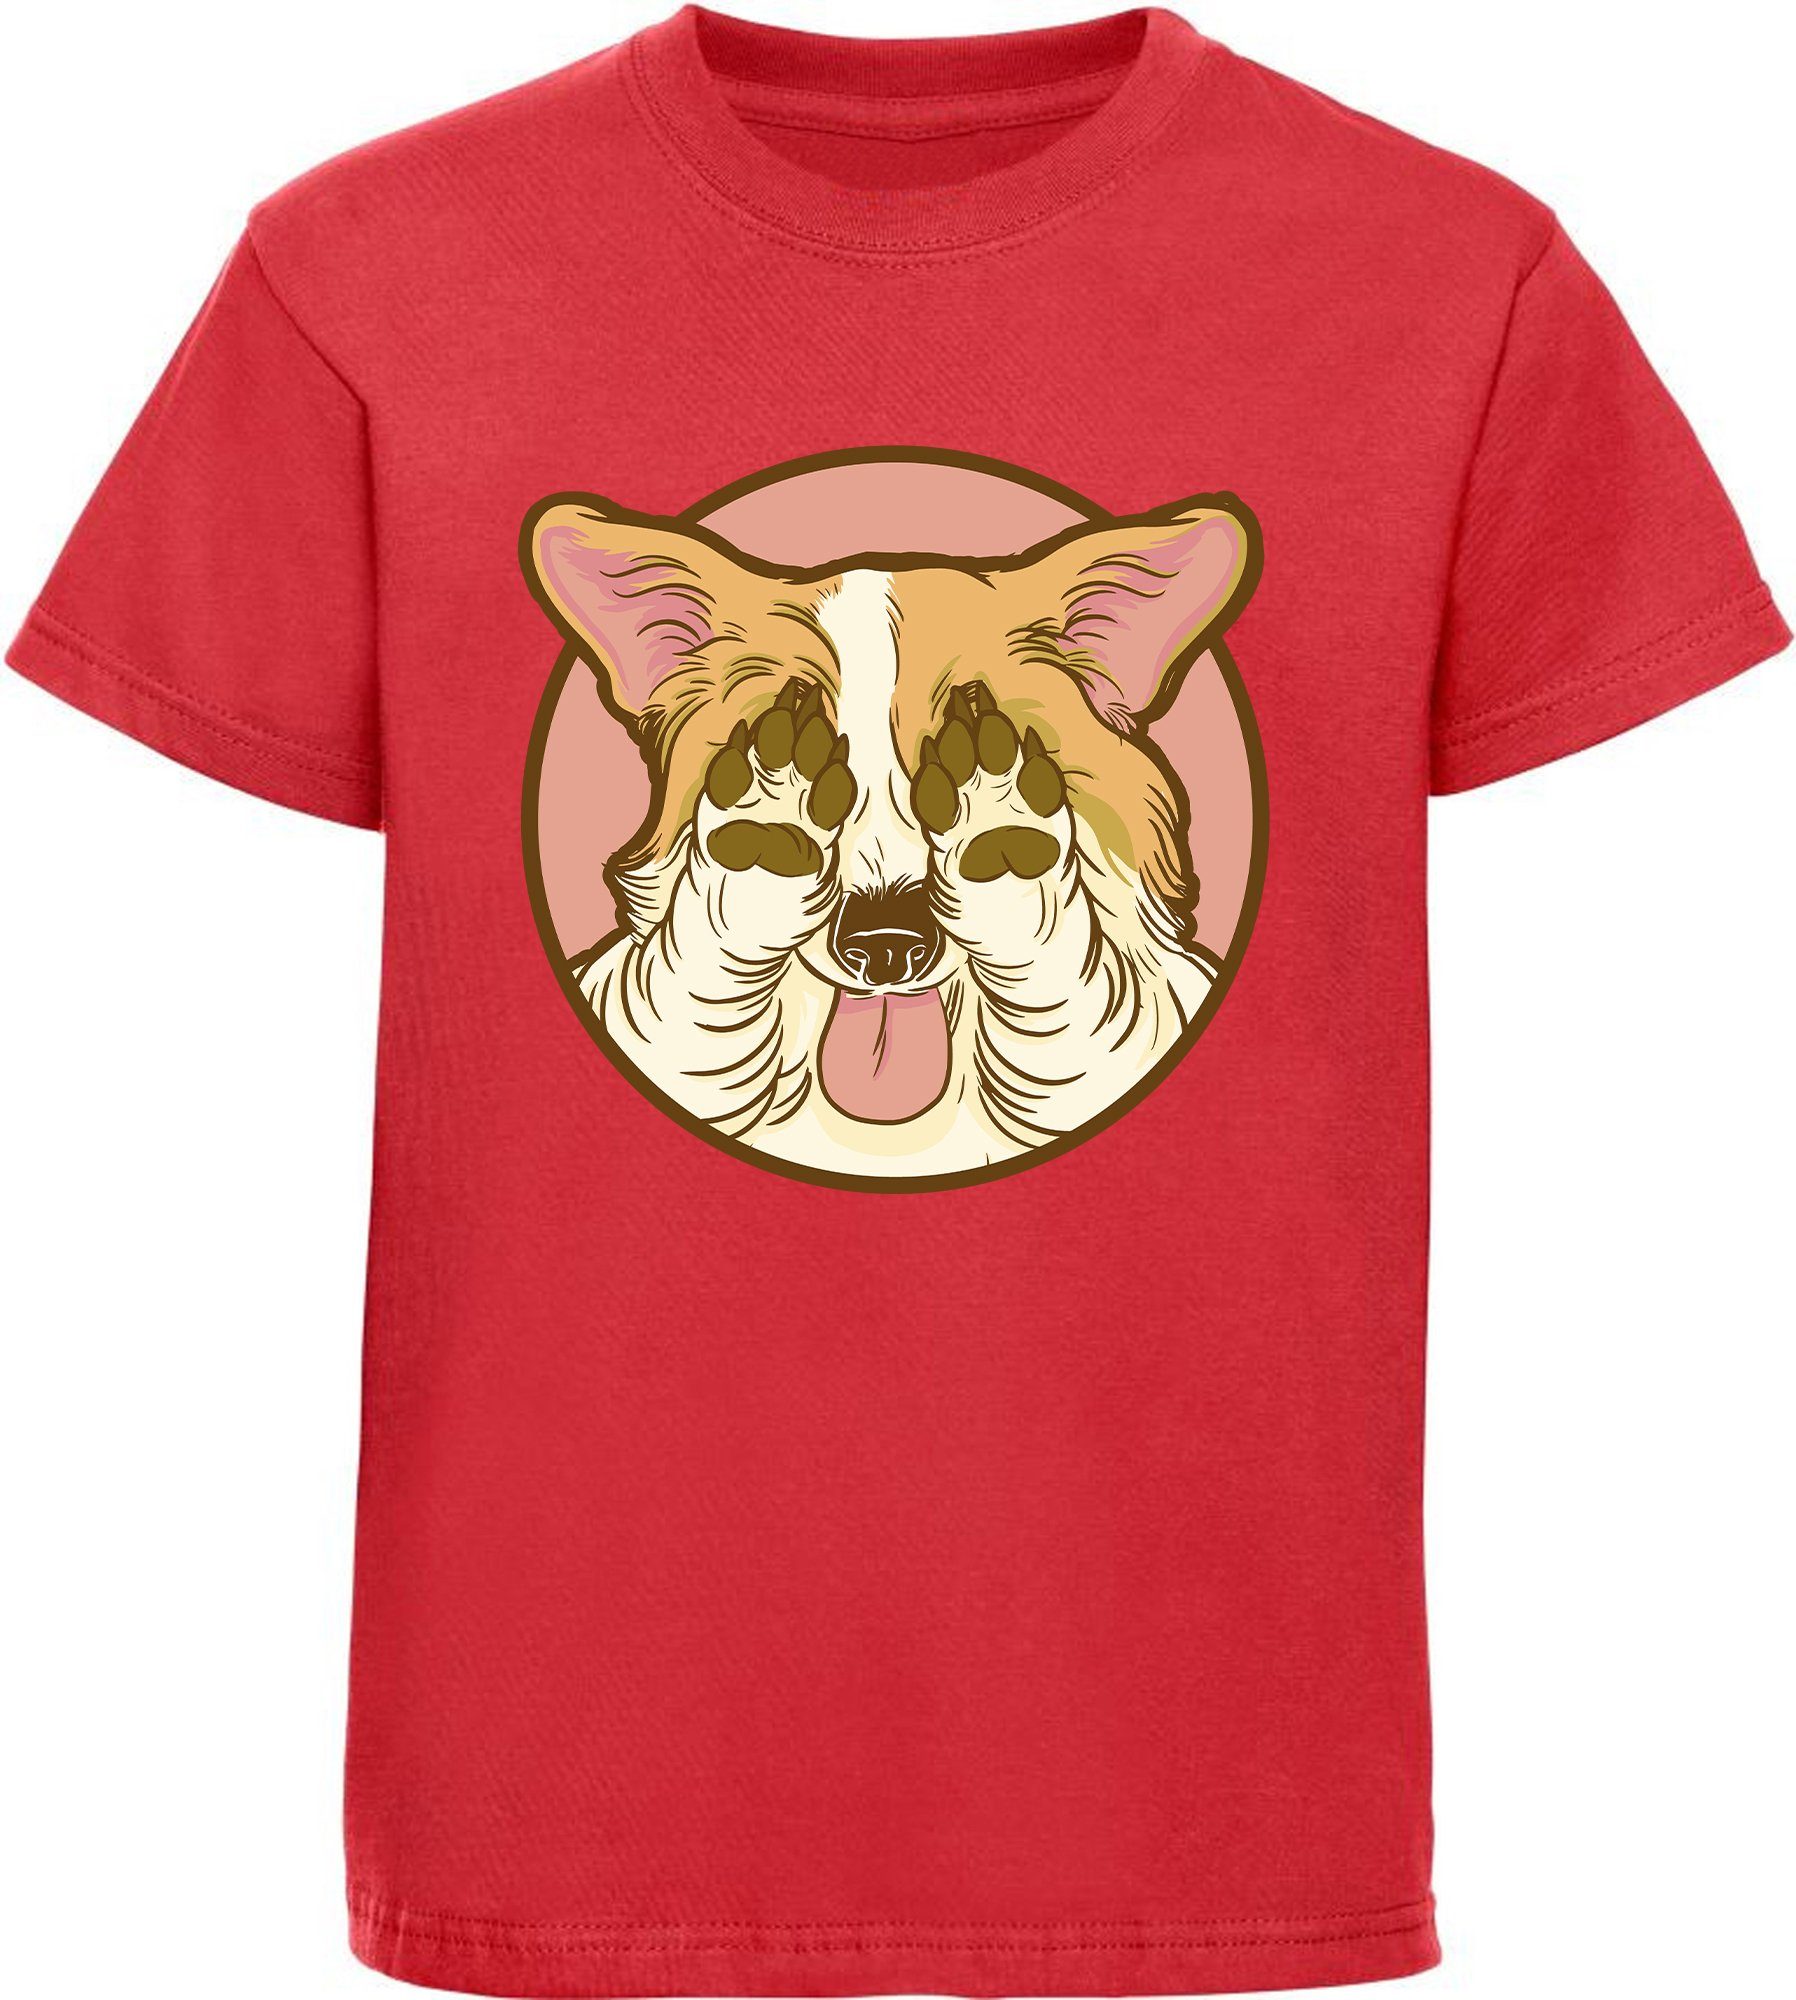 MyDesign24 Print-Shirt bedrucktes Kinder Hunde T-Shirt - Corgi der seine Augen zu hält Baumwollshirt mit Aufdruck, i226 rot | T-Shirts